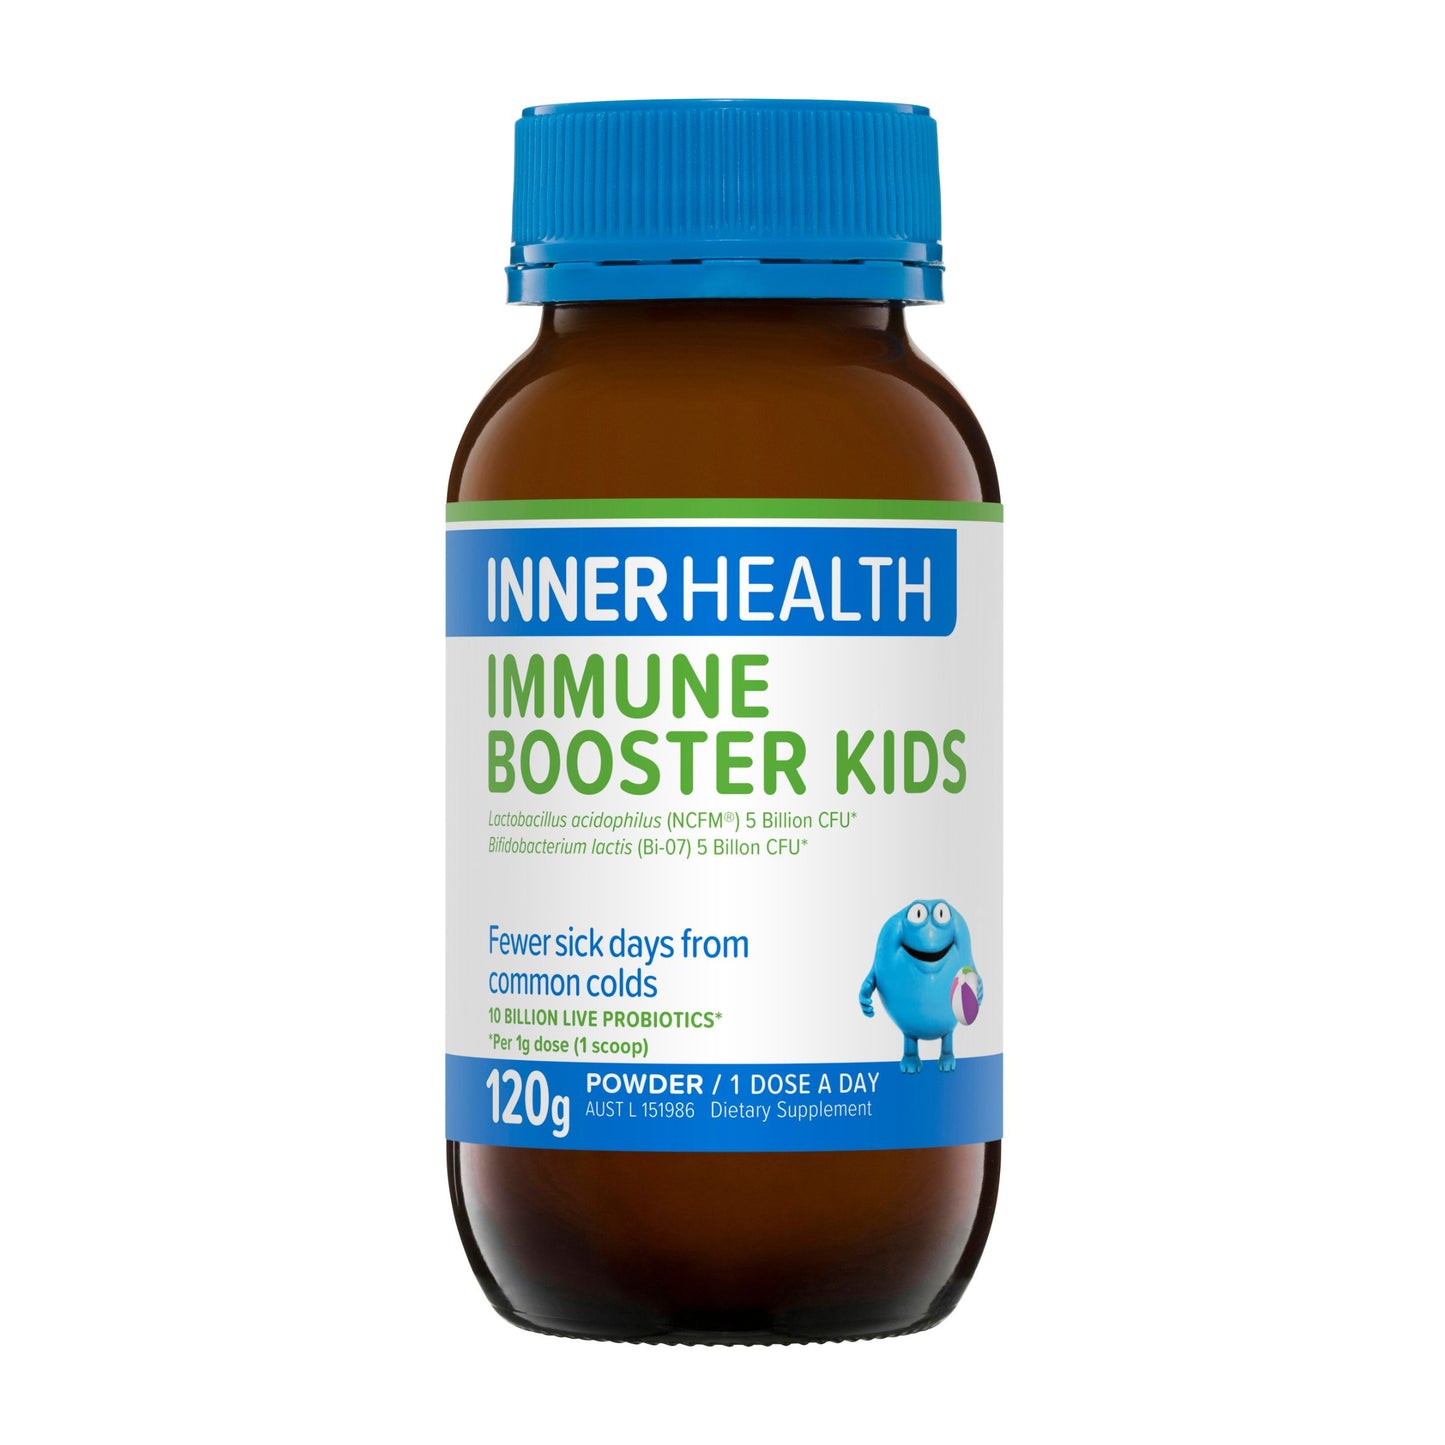 Inner Health Immune Booster Kids Probiotic Powder 120g